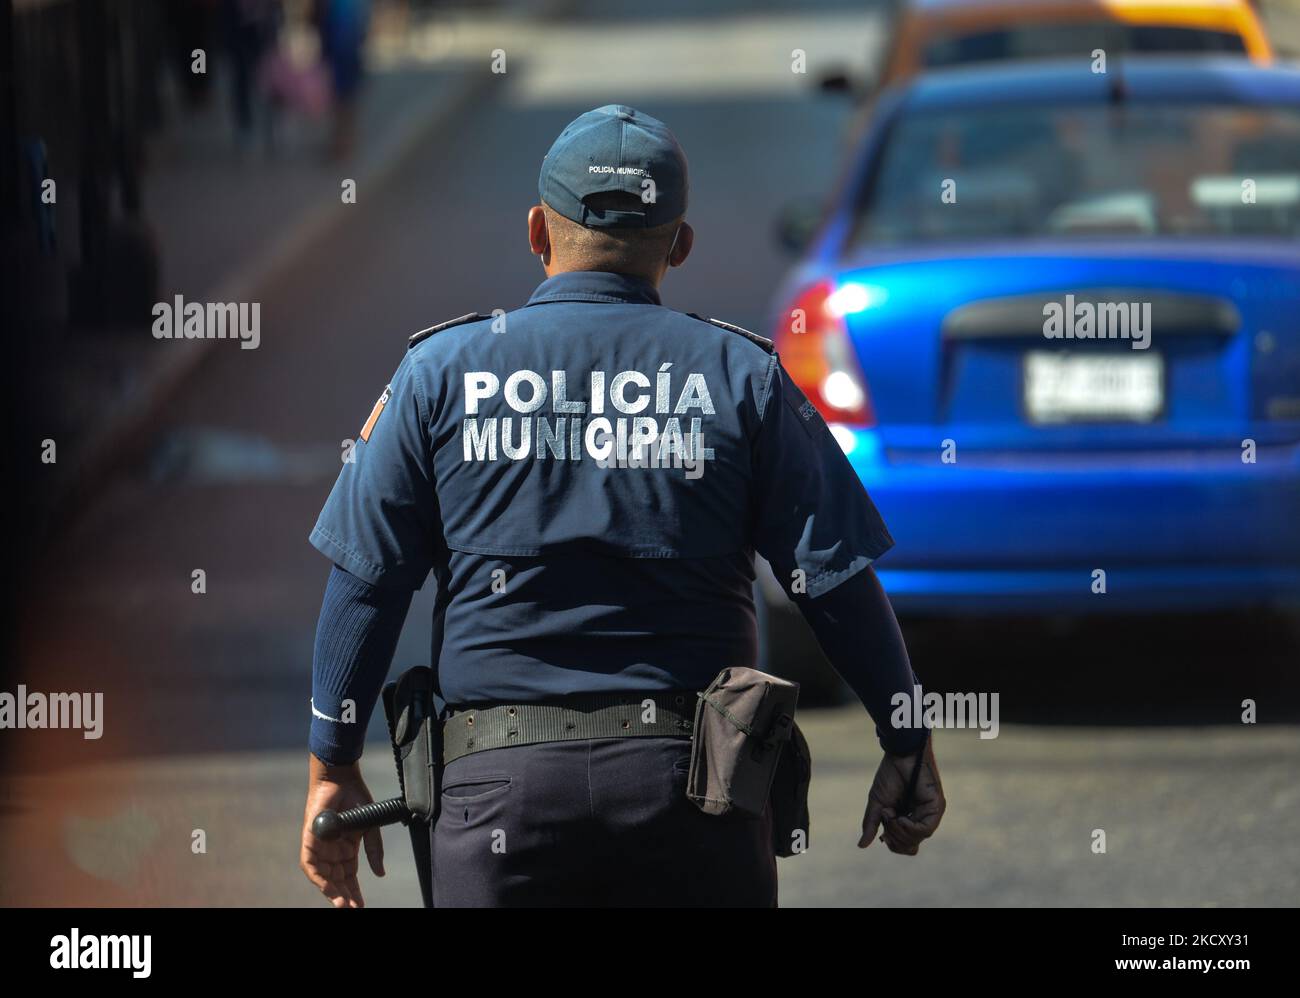 A member of the Policia Municipal (Municipal Police) seen in Hunucmá. On Saturday, December 04, 2021, in Hunucmá, Yucatan, Mexico. (Photo by Artur Widak/NurPhoto) Stock Photo